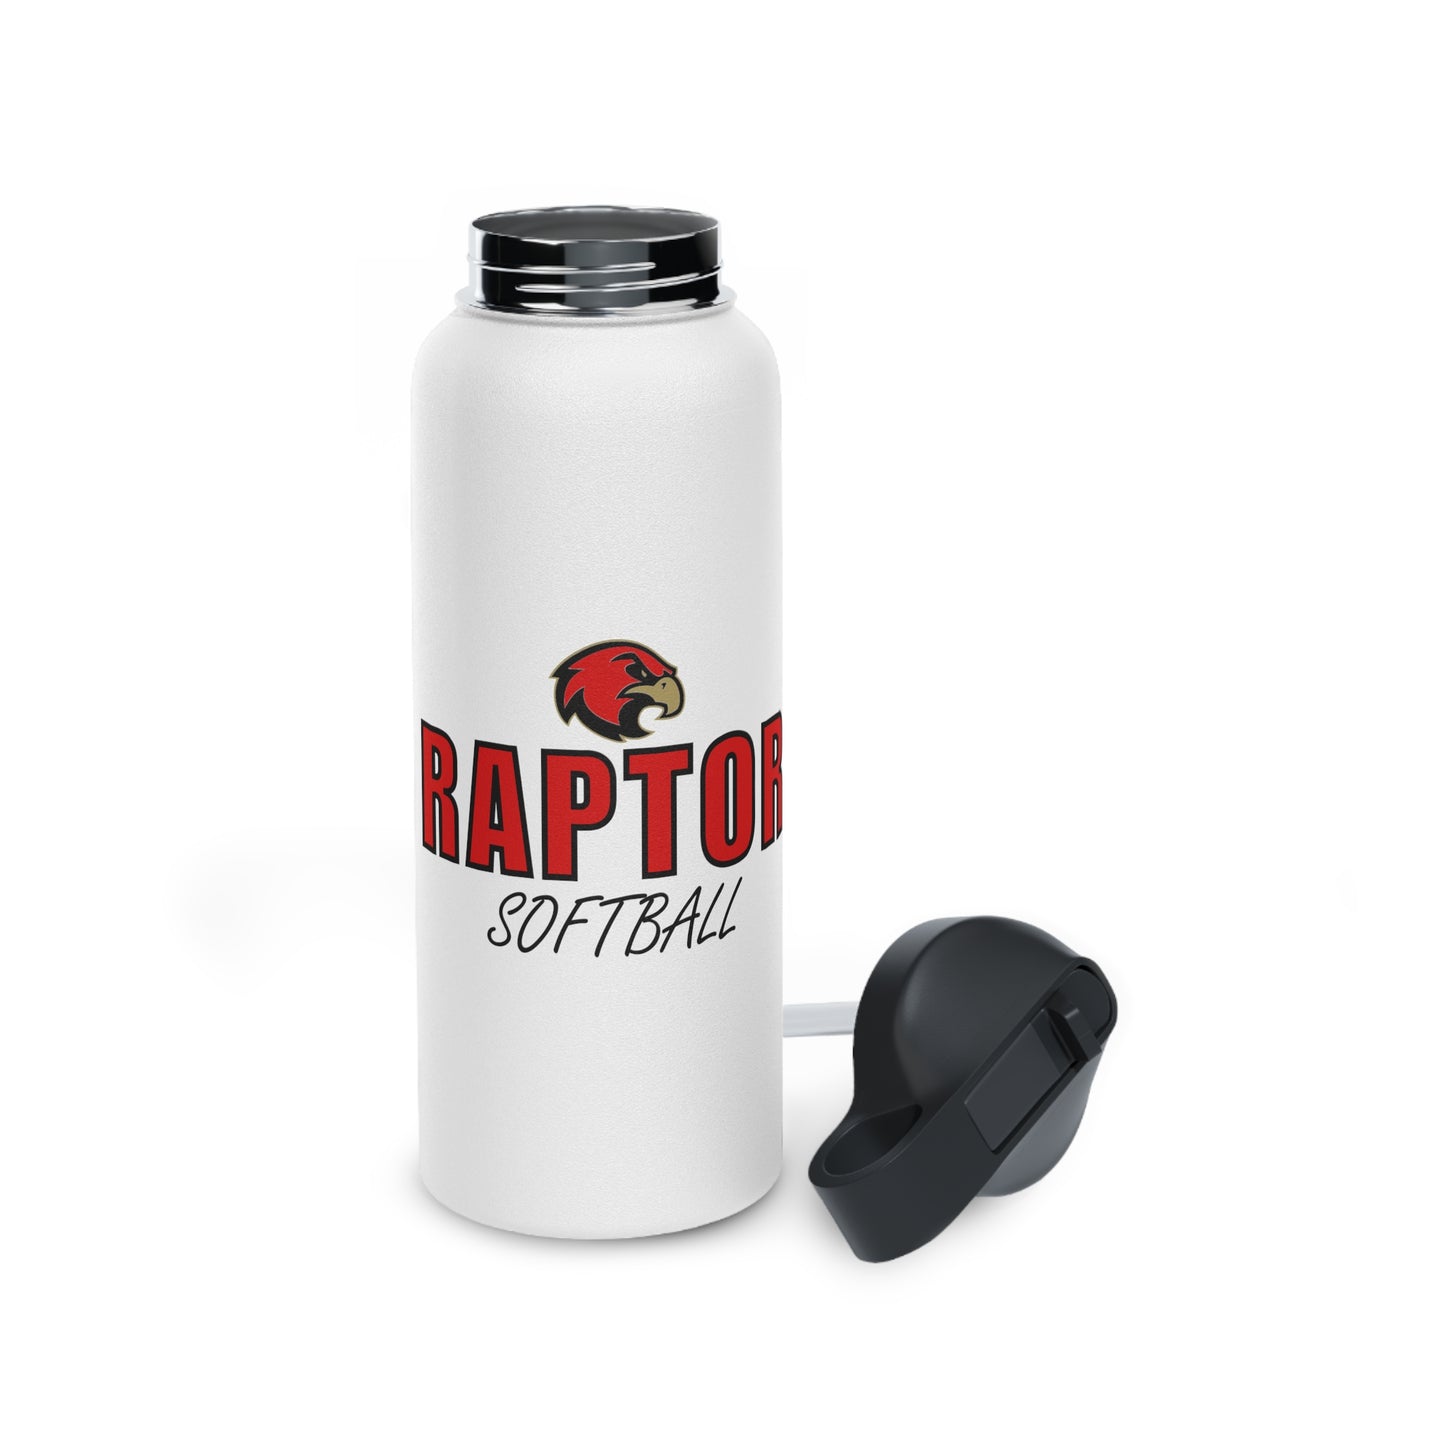 Raptor Stainless Steel Water Bottle, Standard Lid